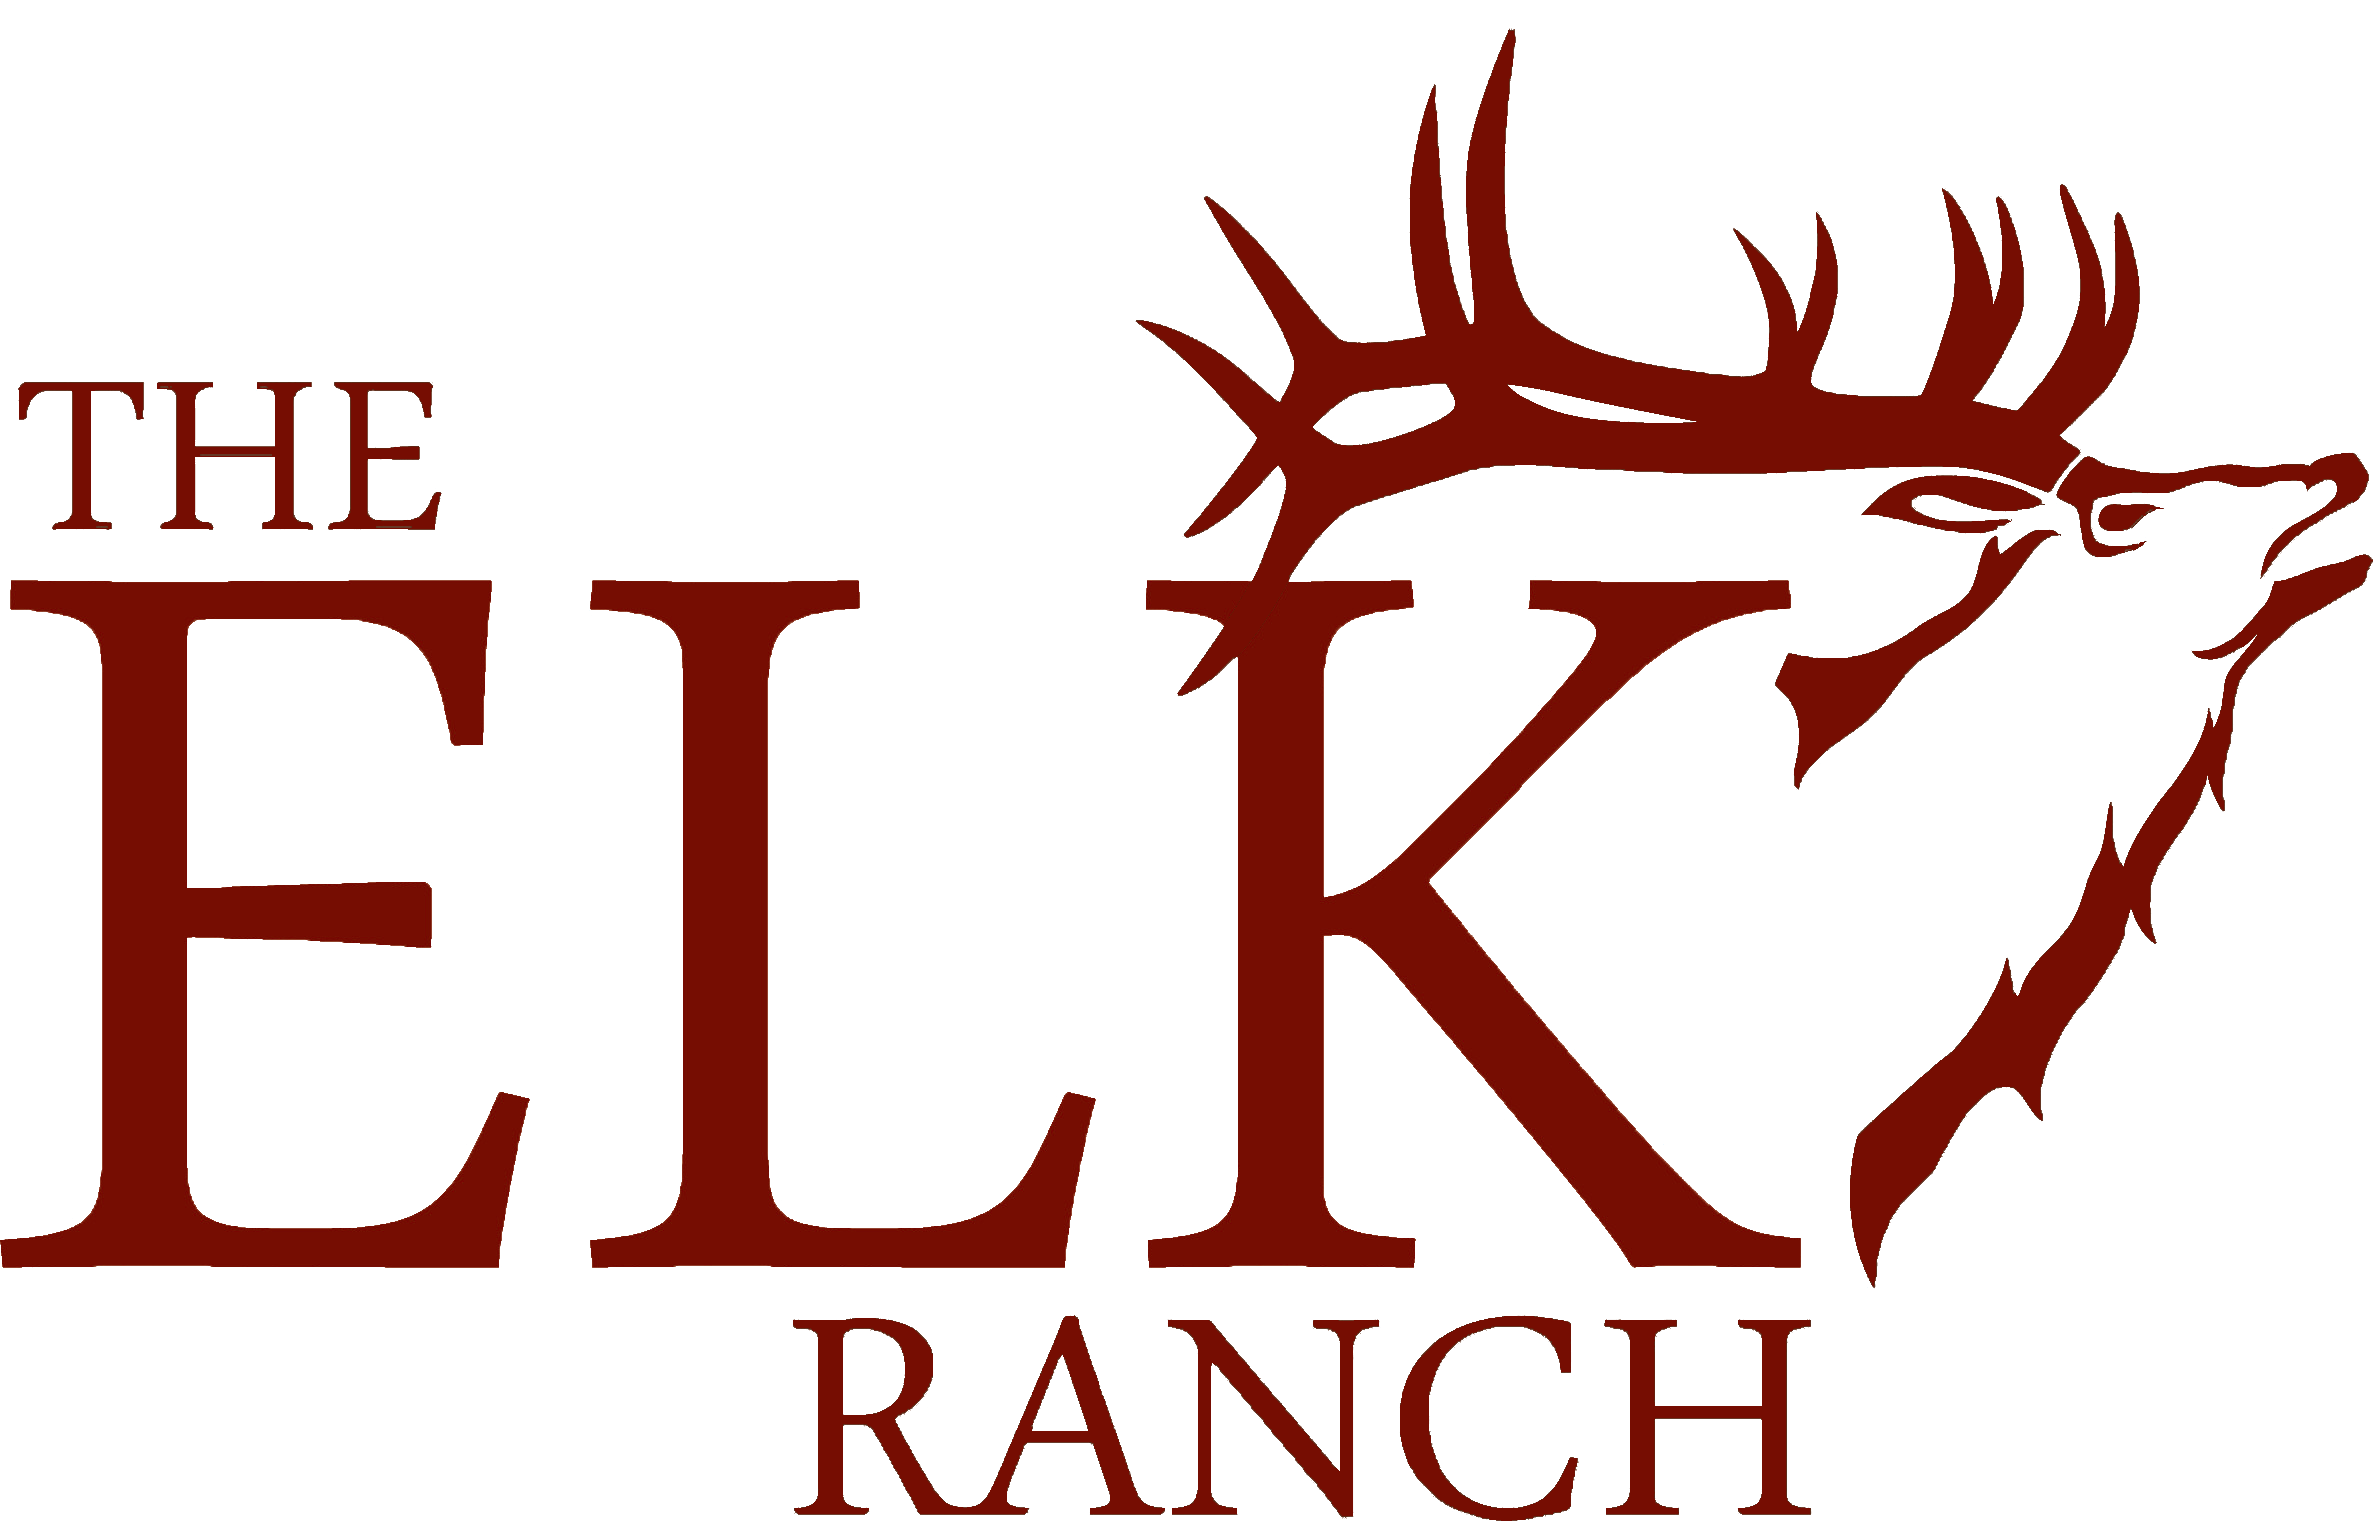 The Elk Ranch